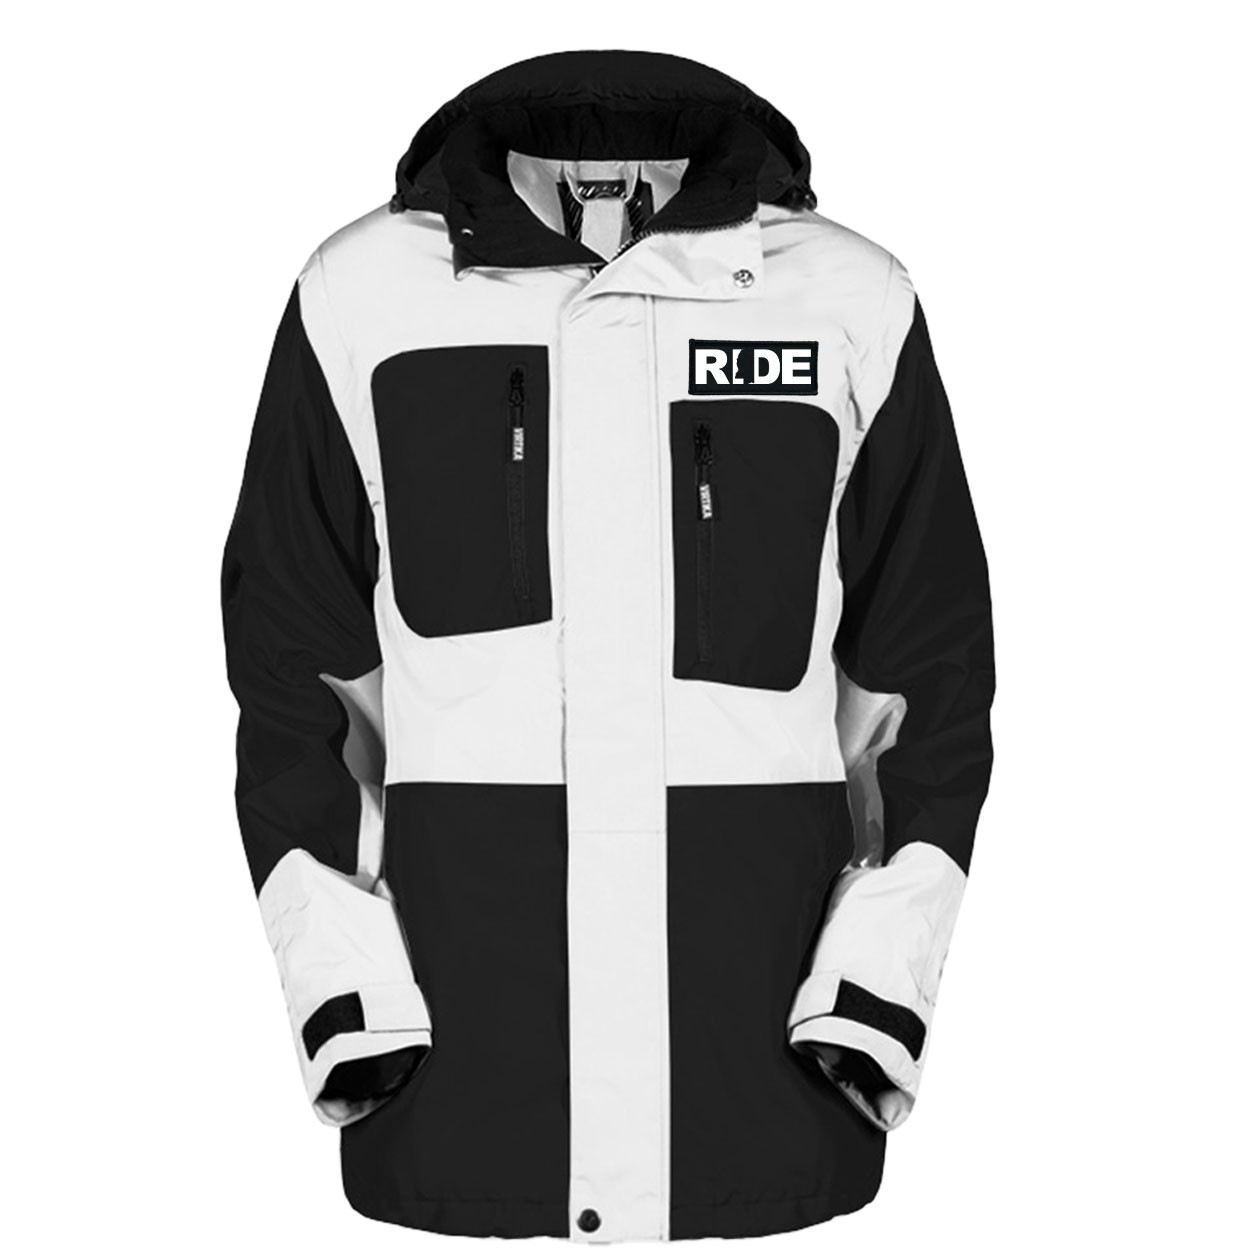 Ride Mississippi Pro Waterproof Breathable Winter Virtika Jacket Black/White (White Logo)